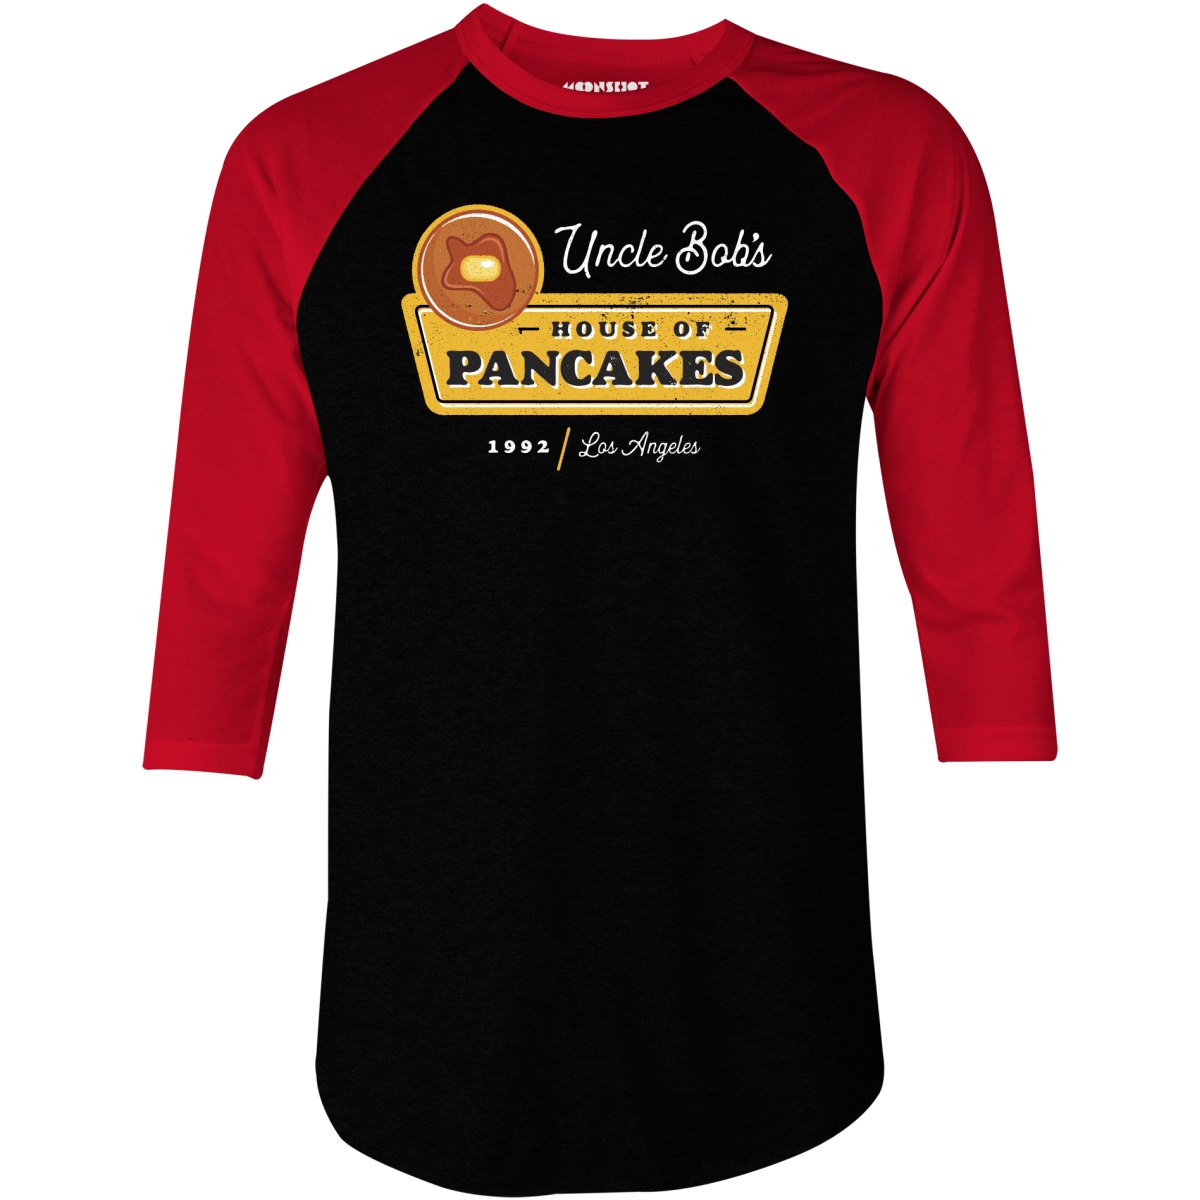 Uncle Bob's House of Pancakes - Reservoir Dogs - 3/4 Sleeve Raglan T-Shirt